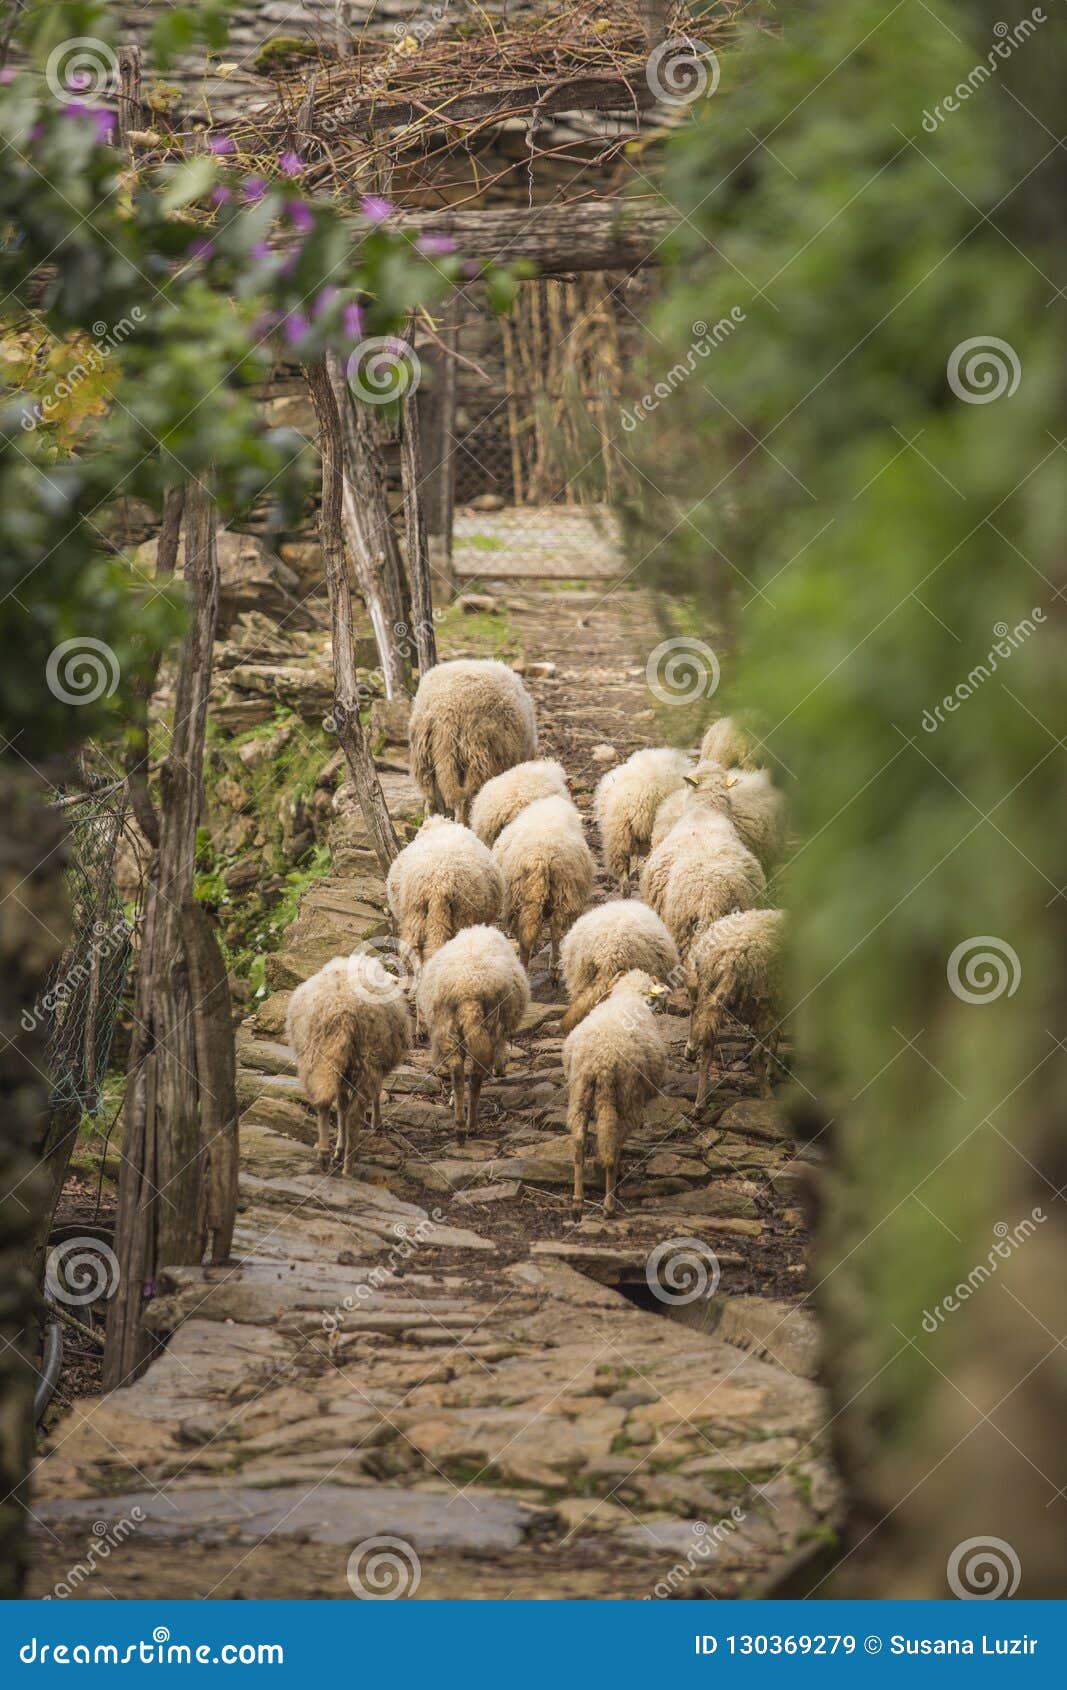 funny sheeps walking at covas do rio